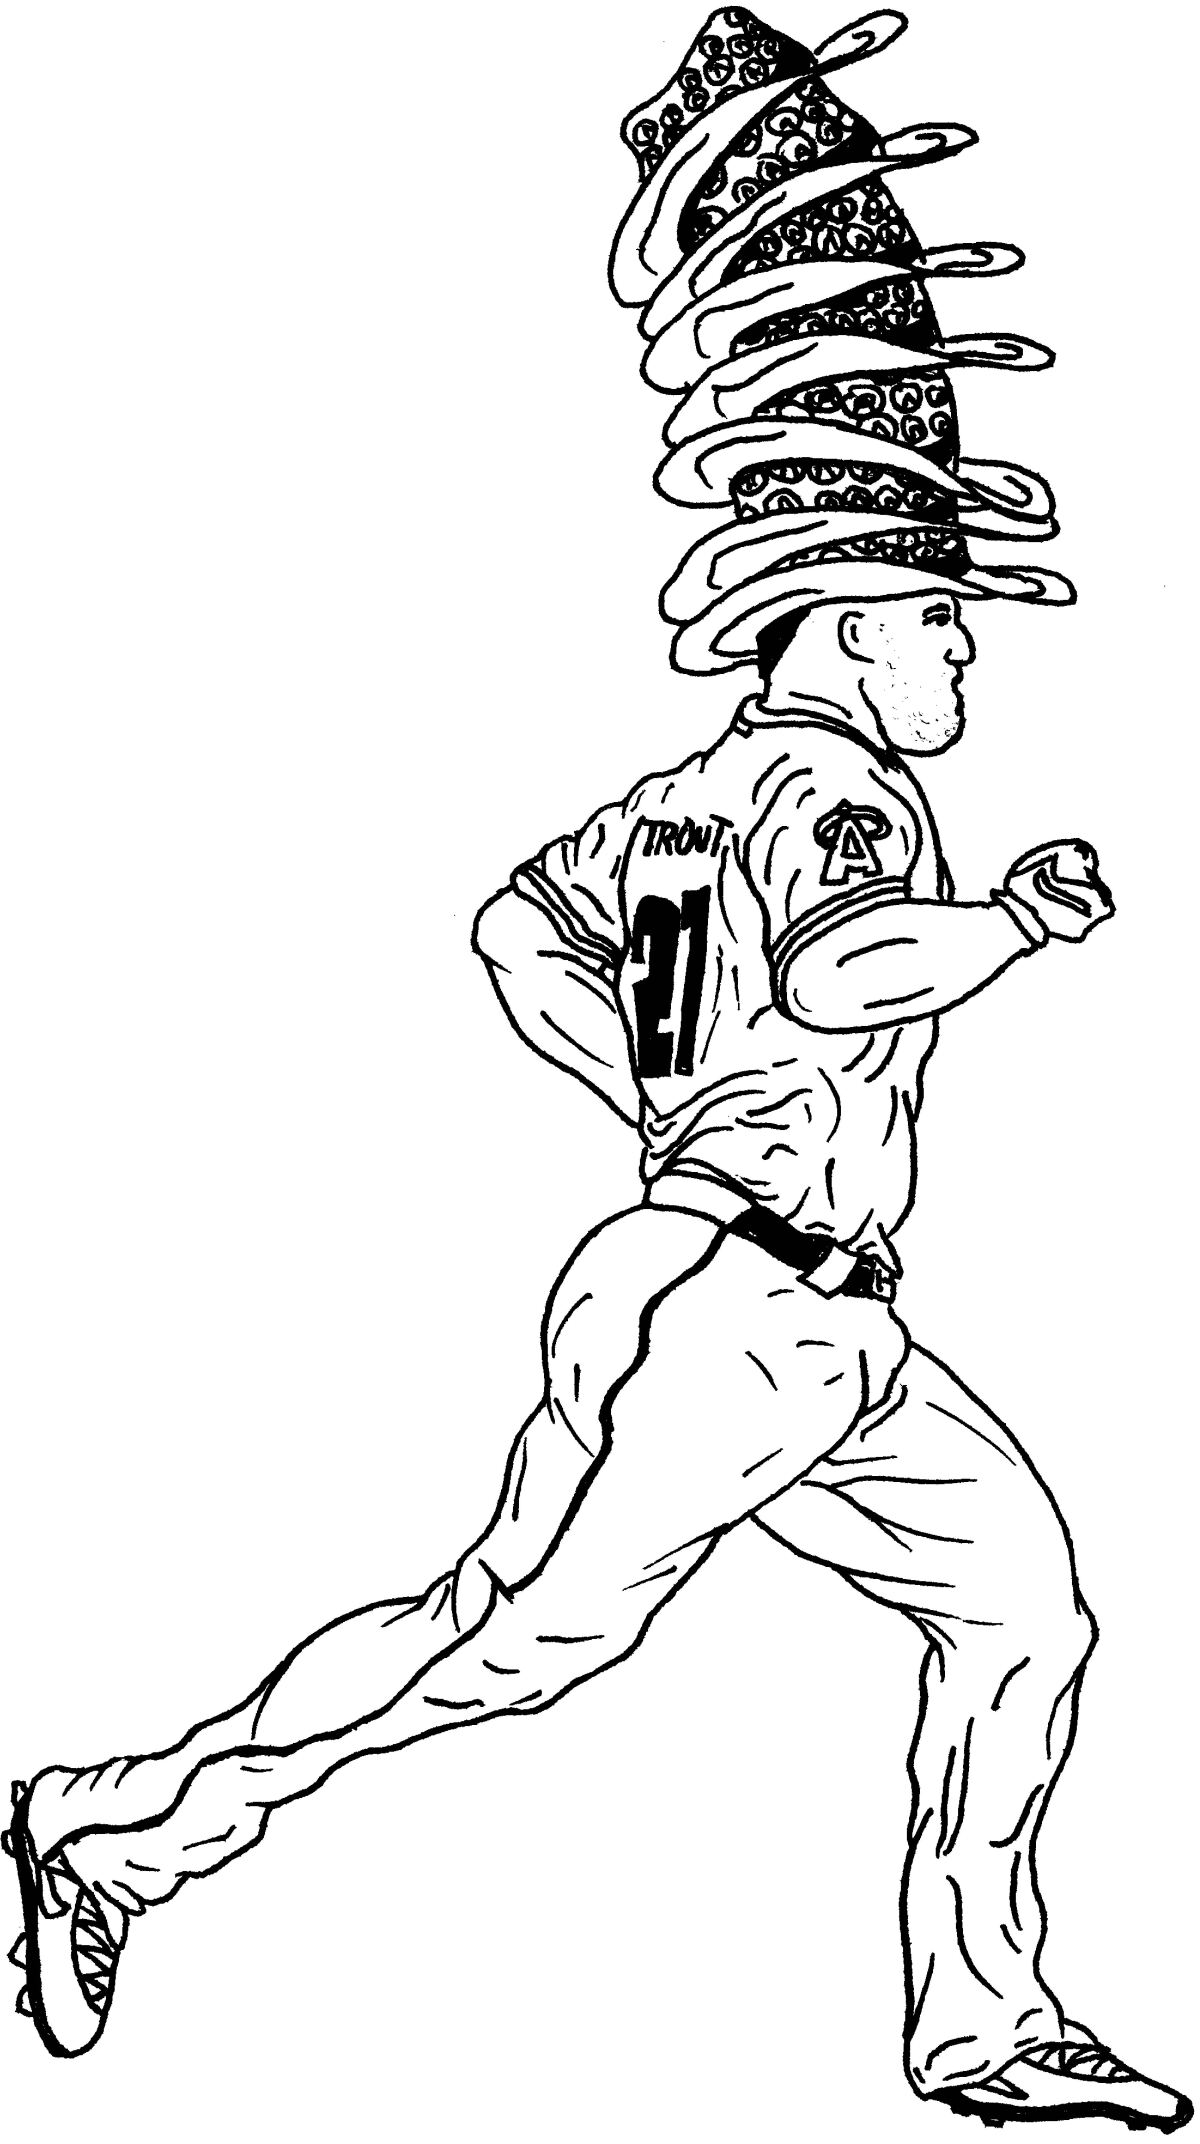 Raymond Sbarra's drawing honors Mike Trout, who hit seven consecutive home runs last season.